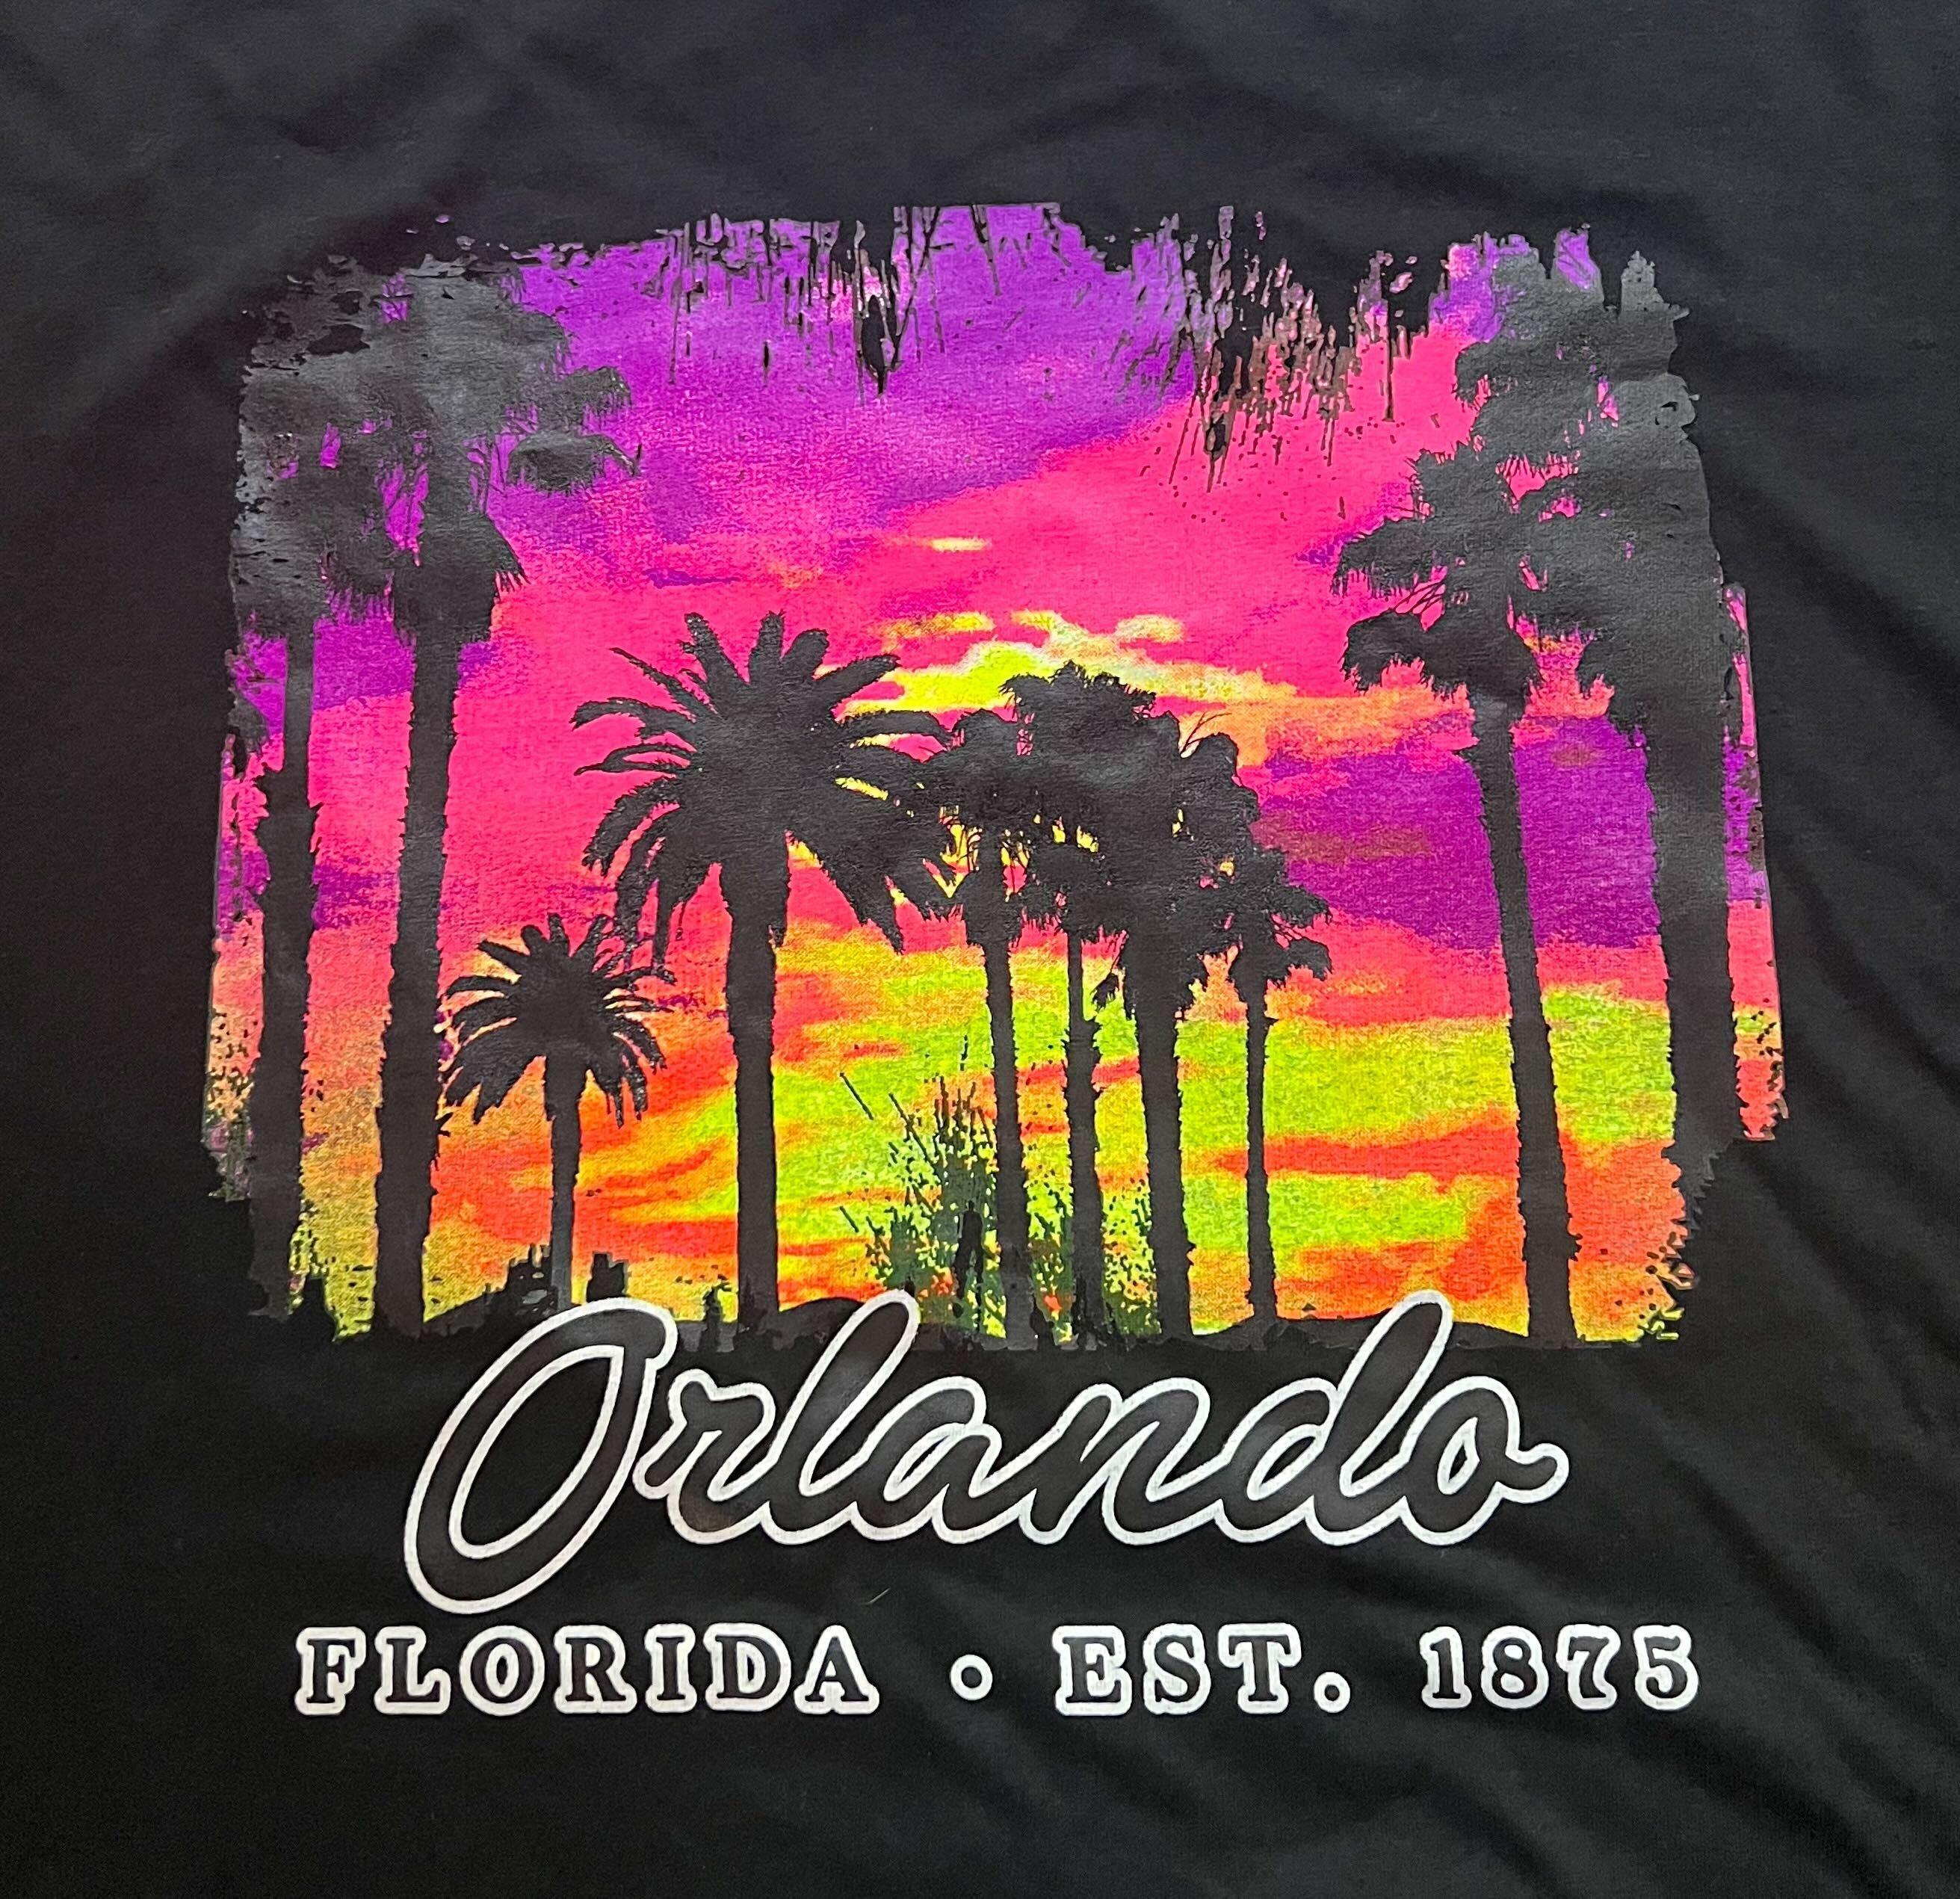 Orlando Florida Sunset Est. 1875 Square Stamp T-Shirt